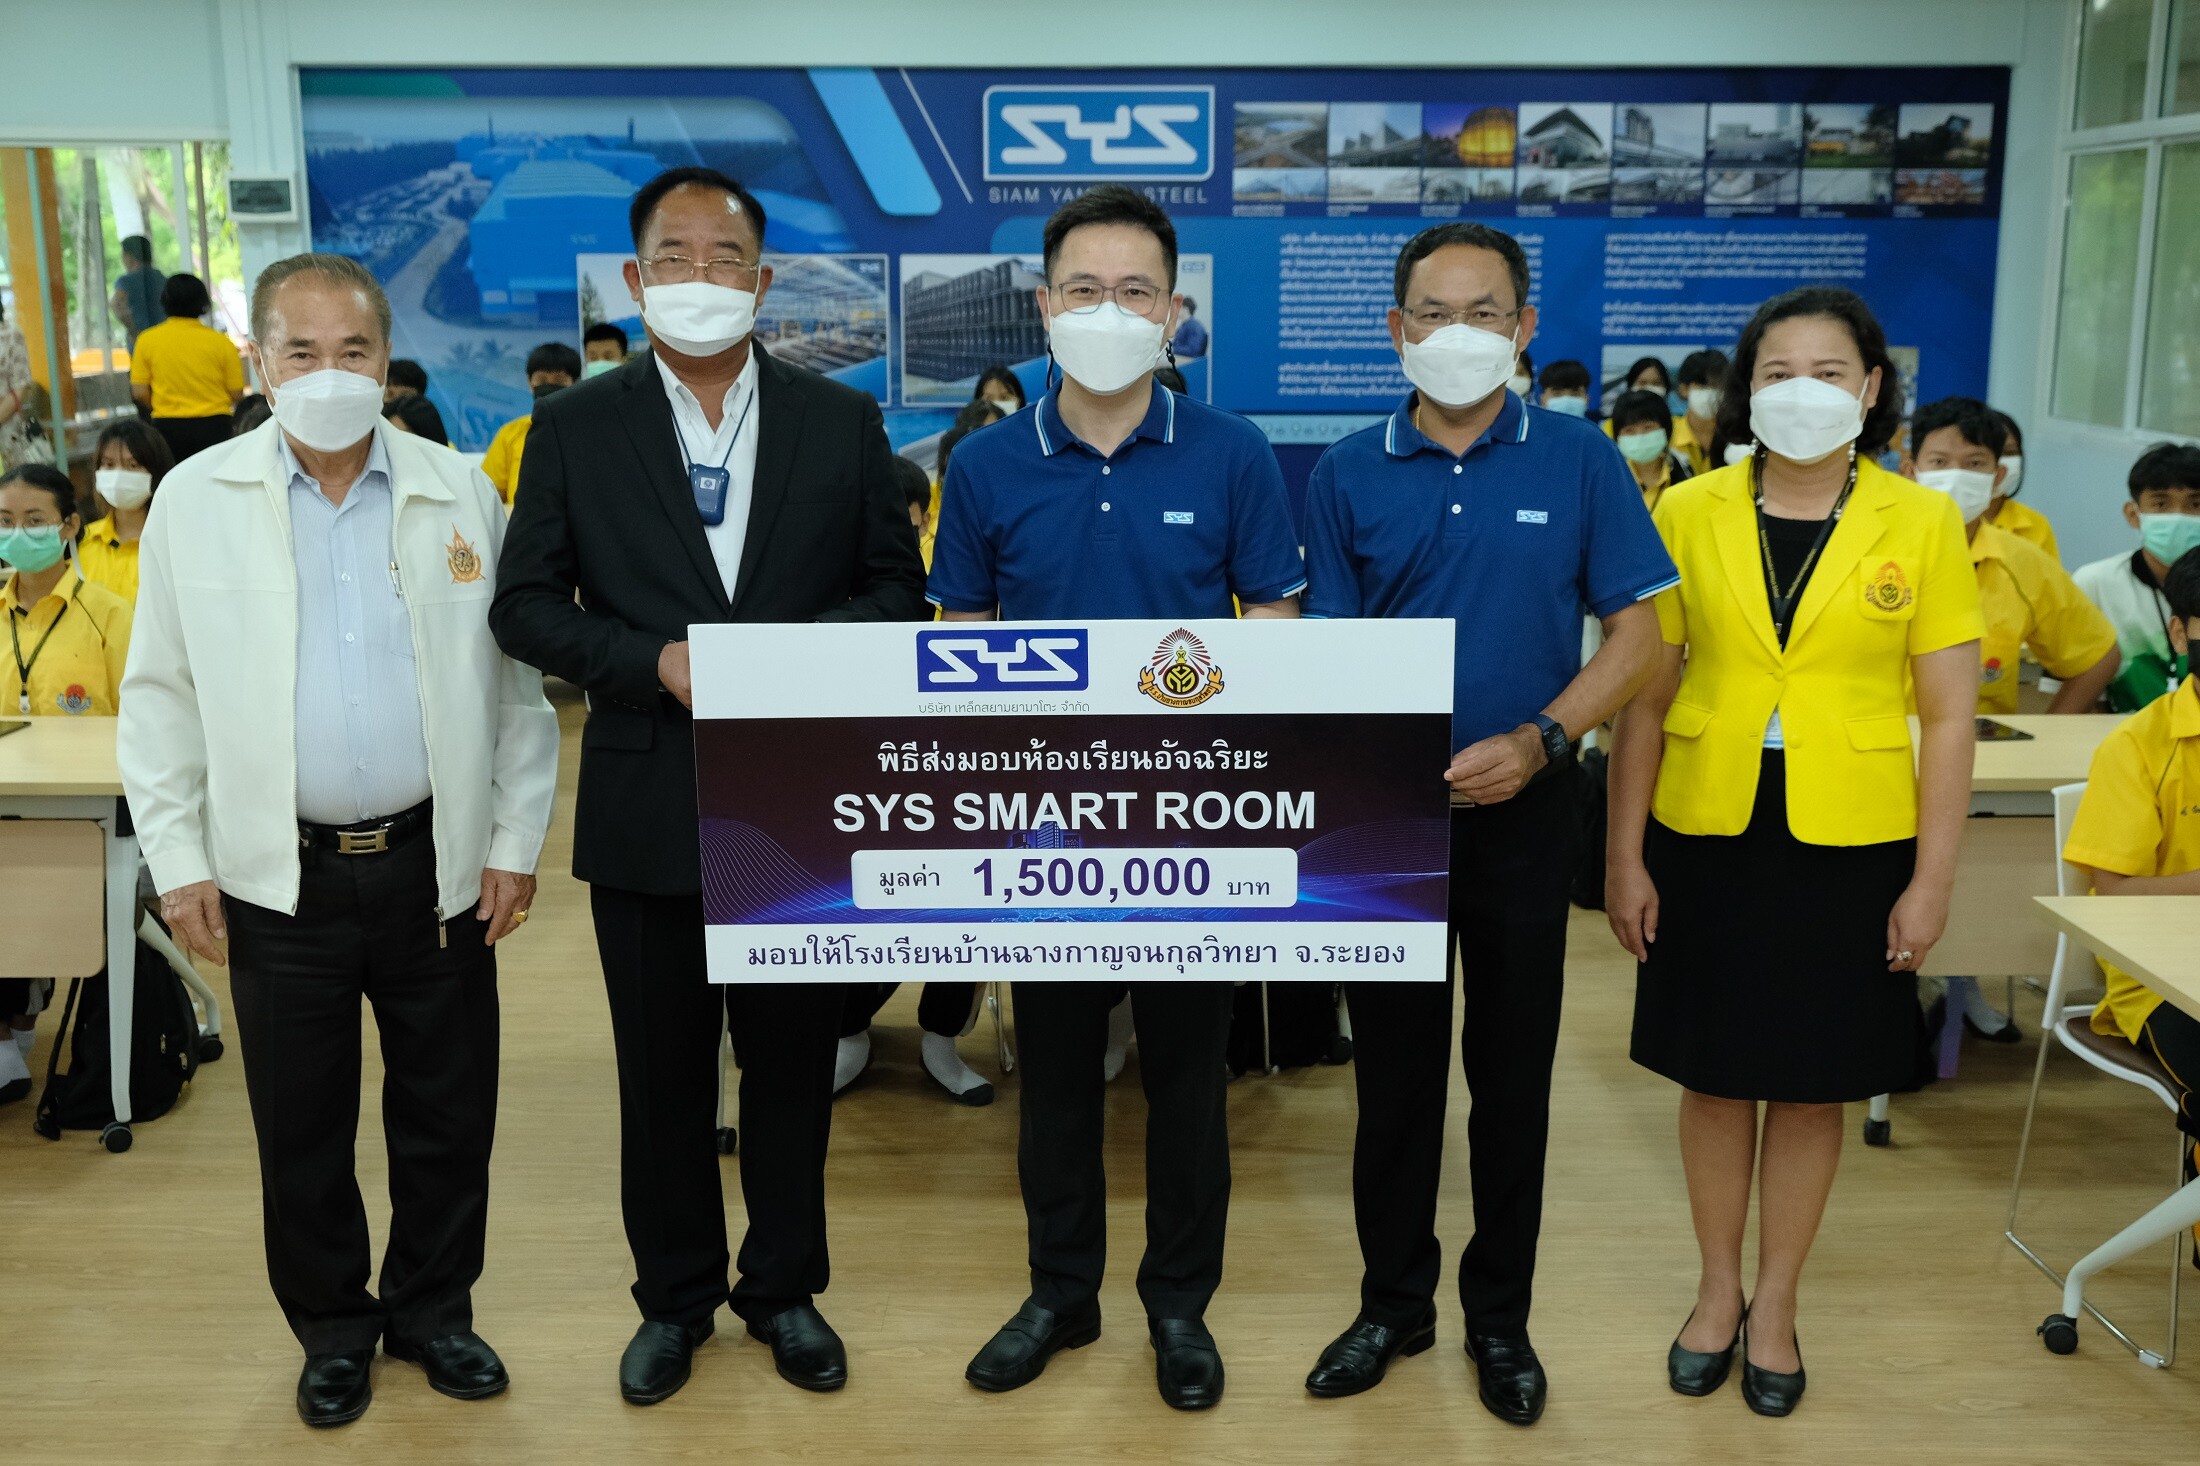 "SYS" เหล็กดีที่คุณไว้ใจ เหล็กไทยหัวใจกรีน ขยายโอกาสการเรียนรู้ มอบ "ห้องเรียนอัจฉริยะ SYS SMART ROOM" ยกระดับการศึกษาไทยให้ก้าวไกลทันโลก